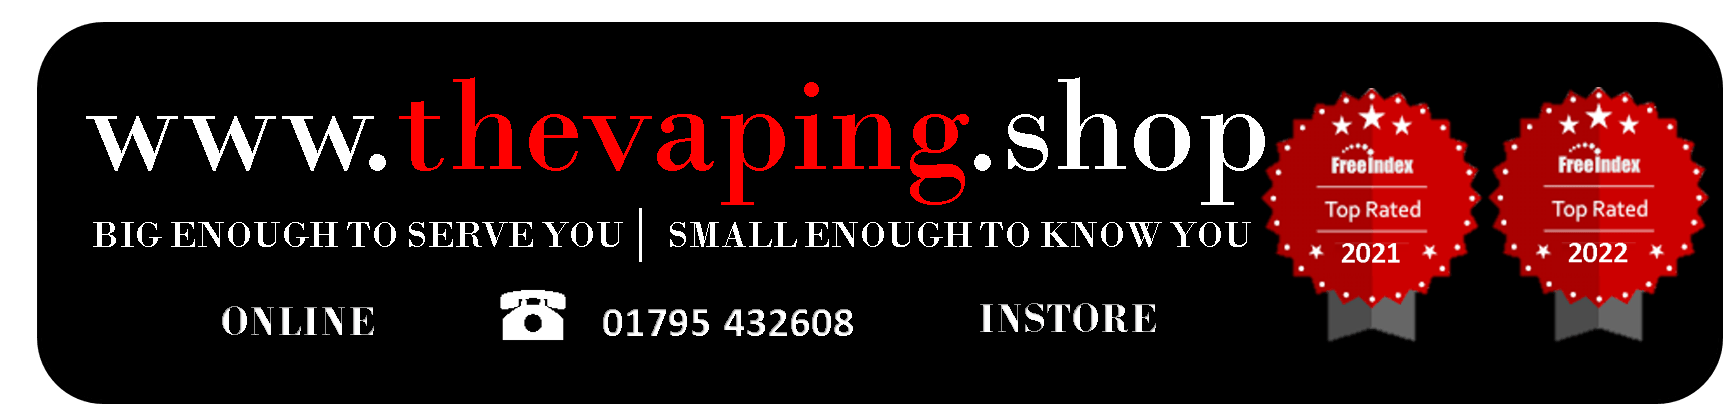 the vapingshop logo 2022